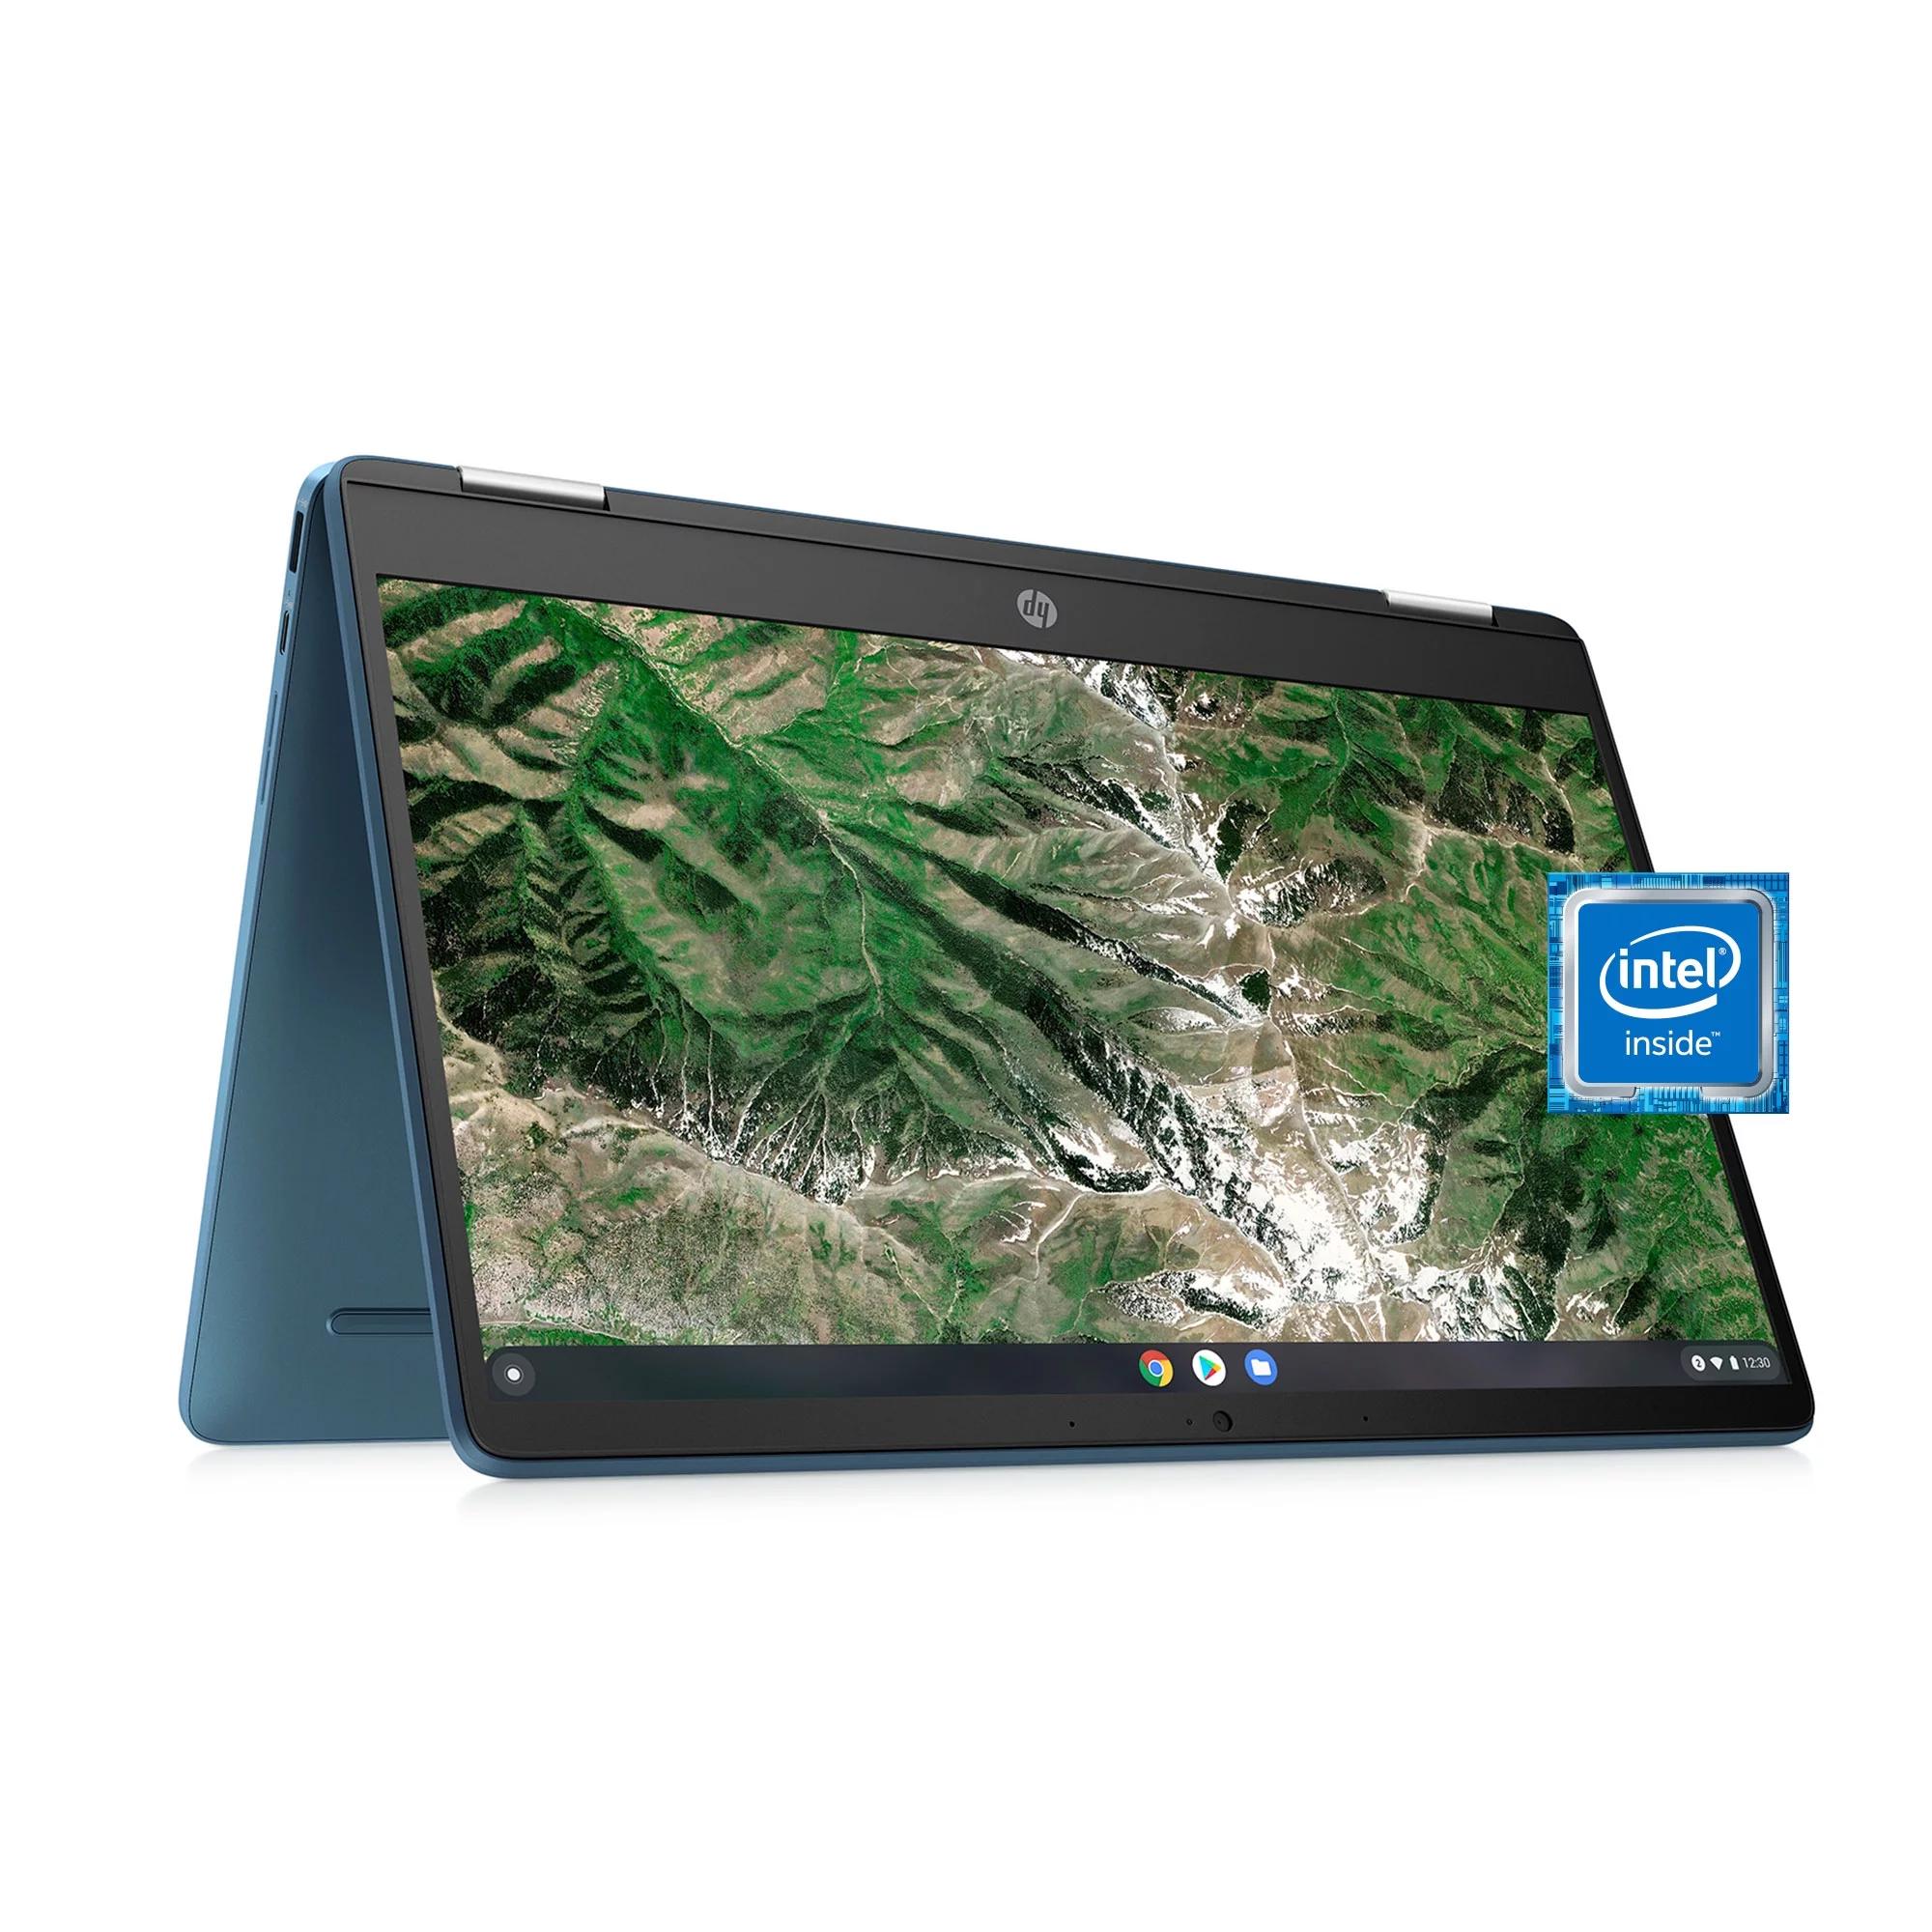 Hp chromebook x360: ultimate 2-in-1 laptop